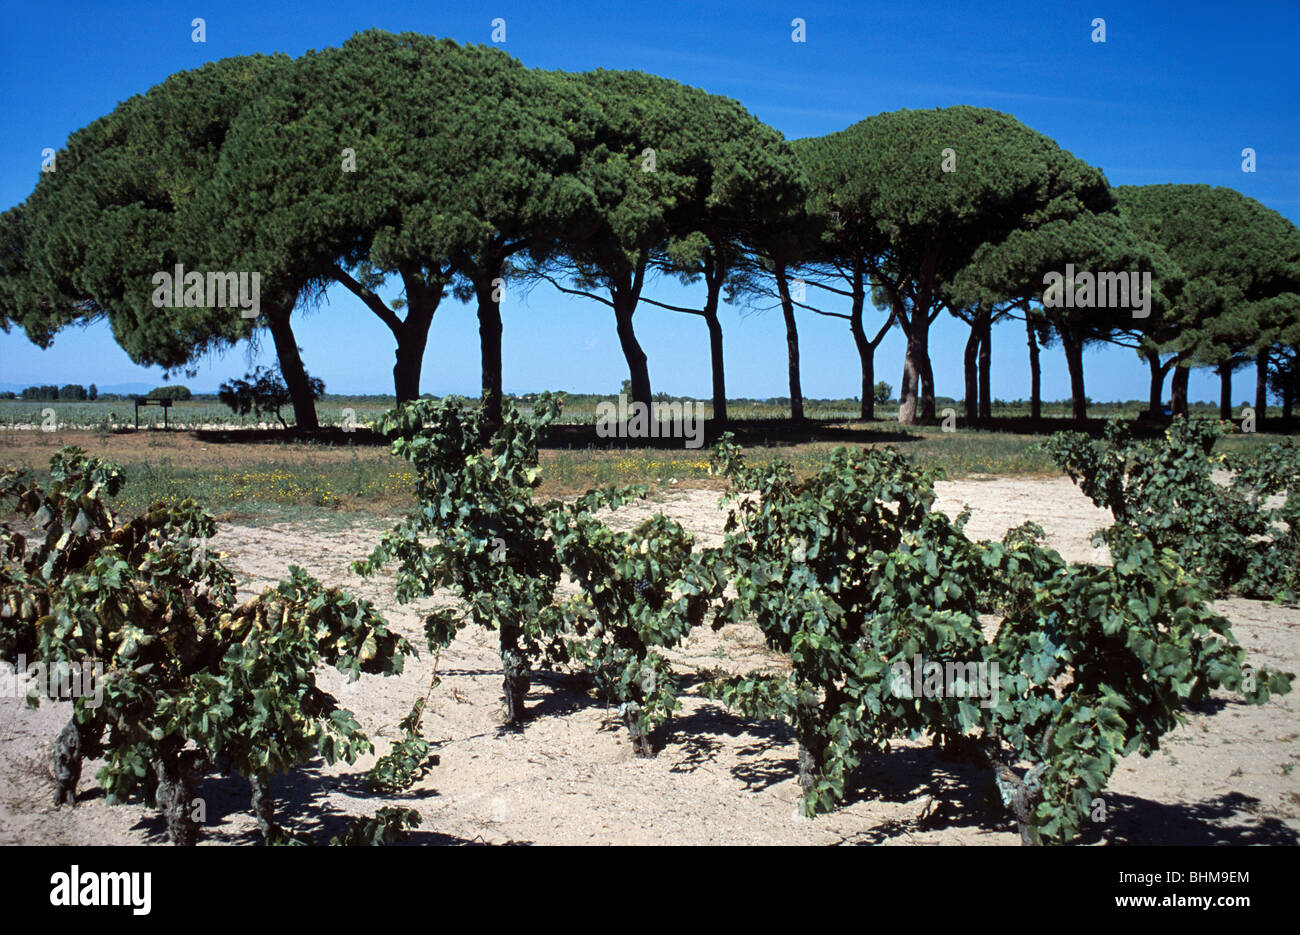 Listel Vines, Vineyard oder Vin du Sable wächst auf Sandy Soils, & Avenue or Row of Stone Pines, Pinus pinea, alias Parasol Pines Camargue, Frankreich Stockfoto